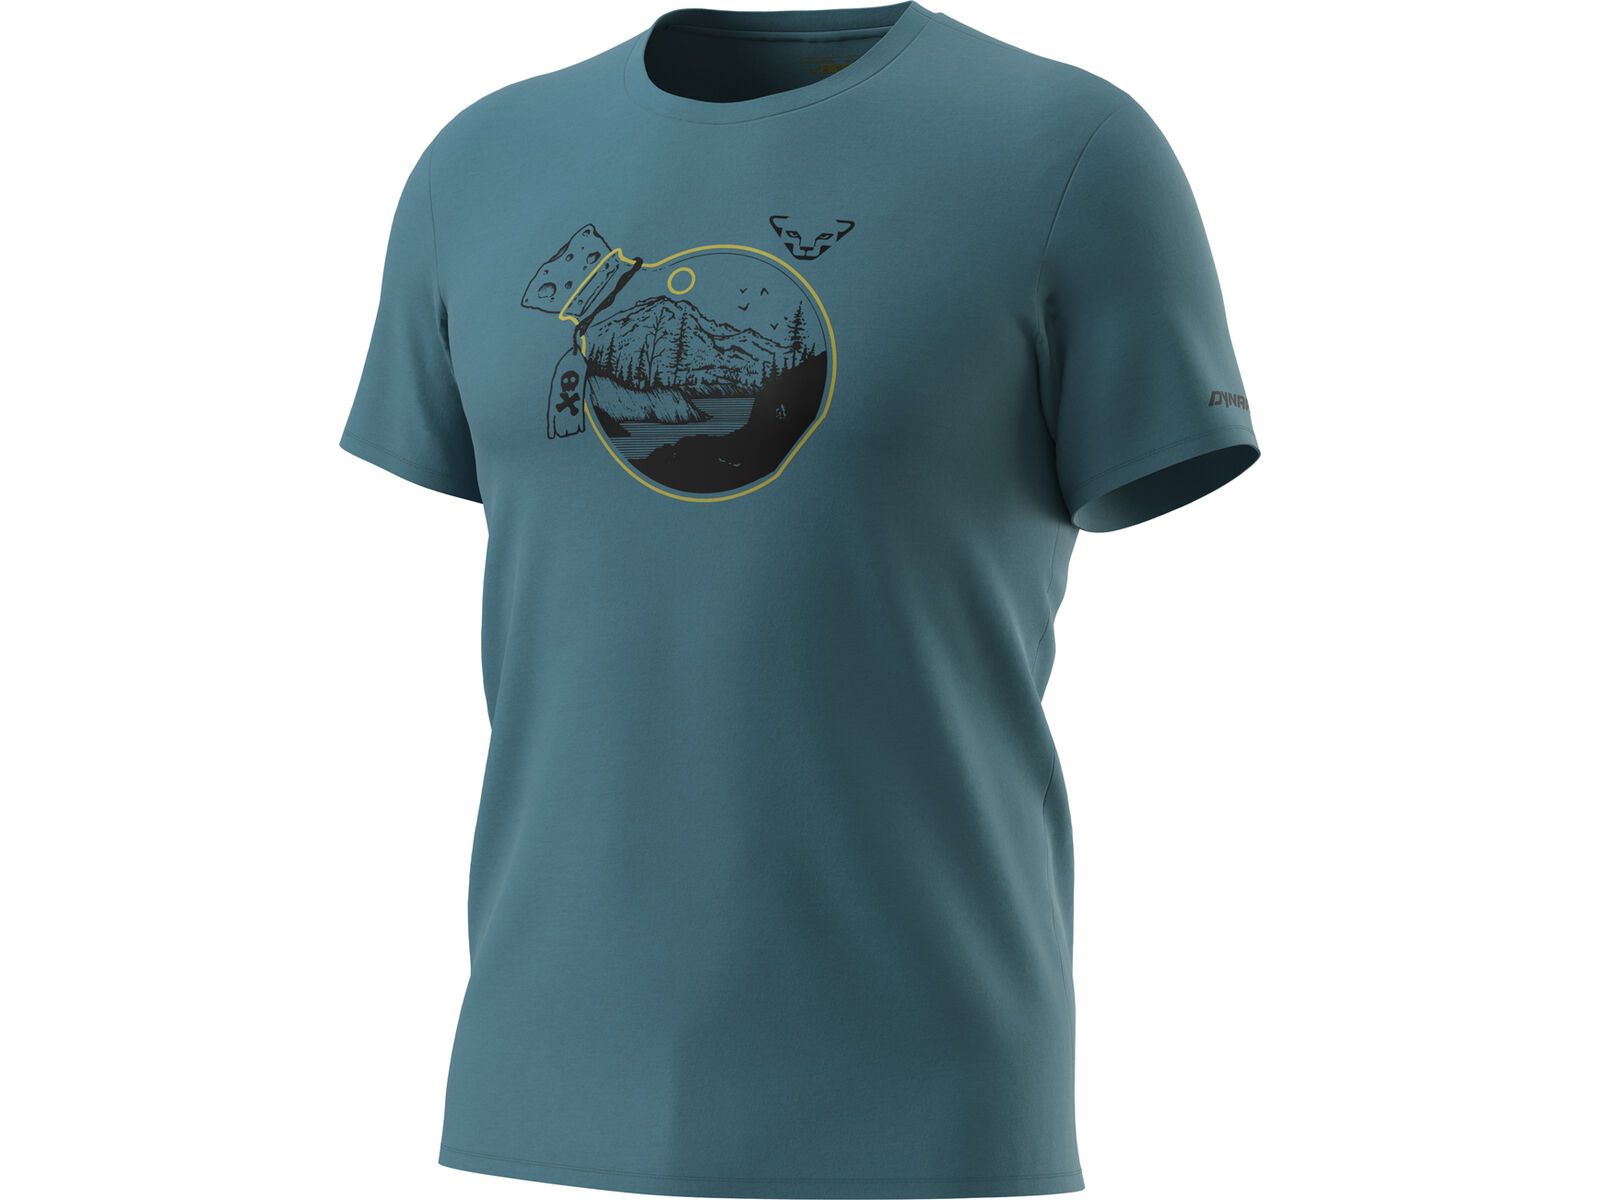 Dynafit 24/7 Artist Series Cotton T-Shirt Herren, mallard blue | Bild 1